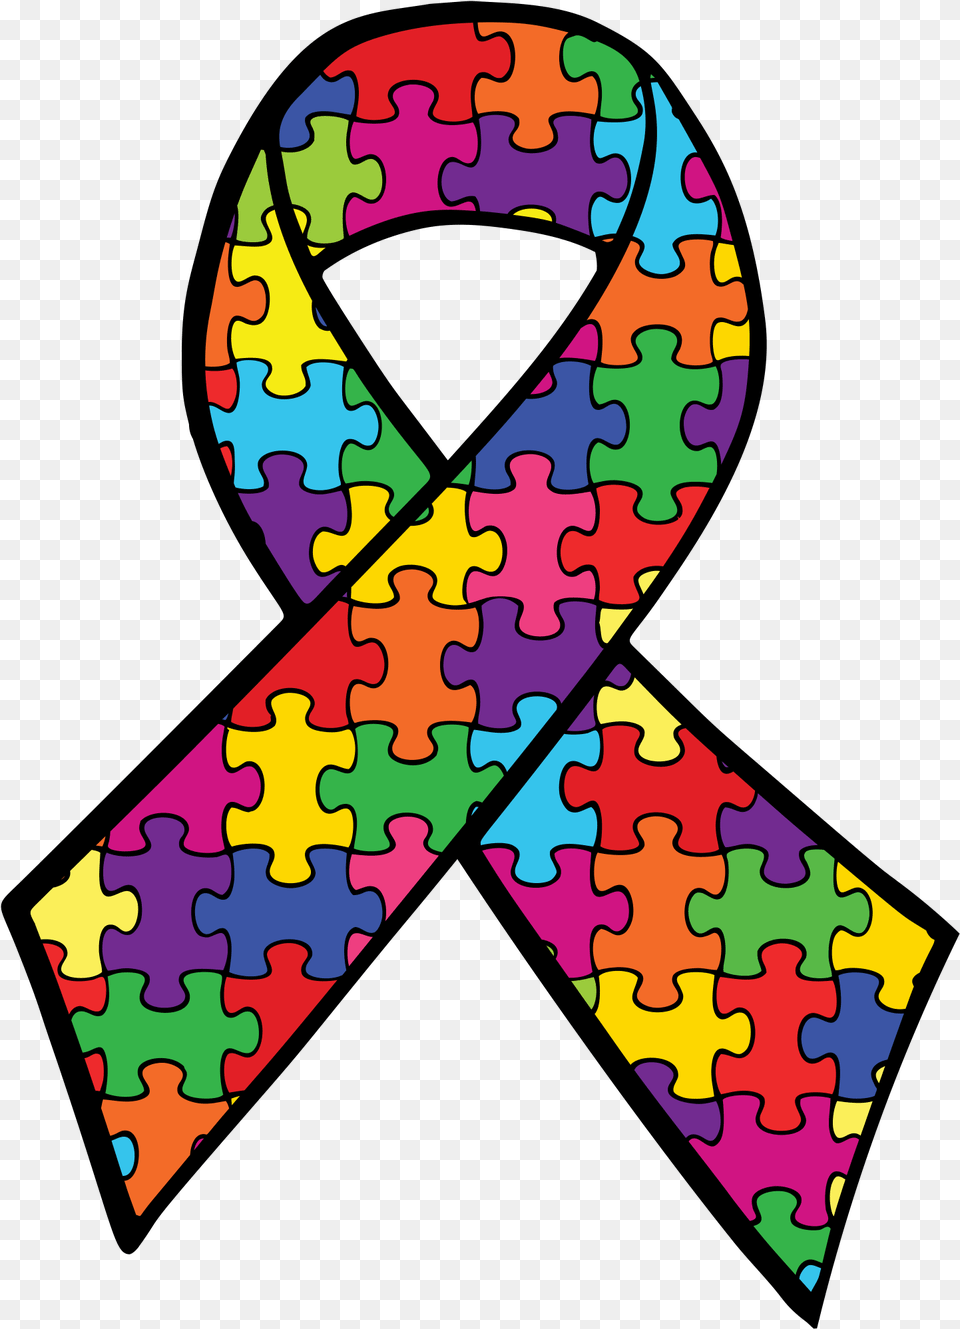 Autism Awareness Ribbon Rainbow Autism Awareness Ribbon, Accessories, Formal Wear, Tie, Game Png Image